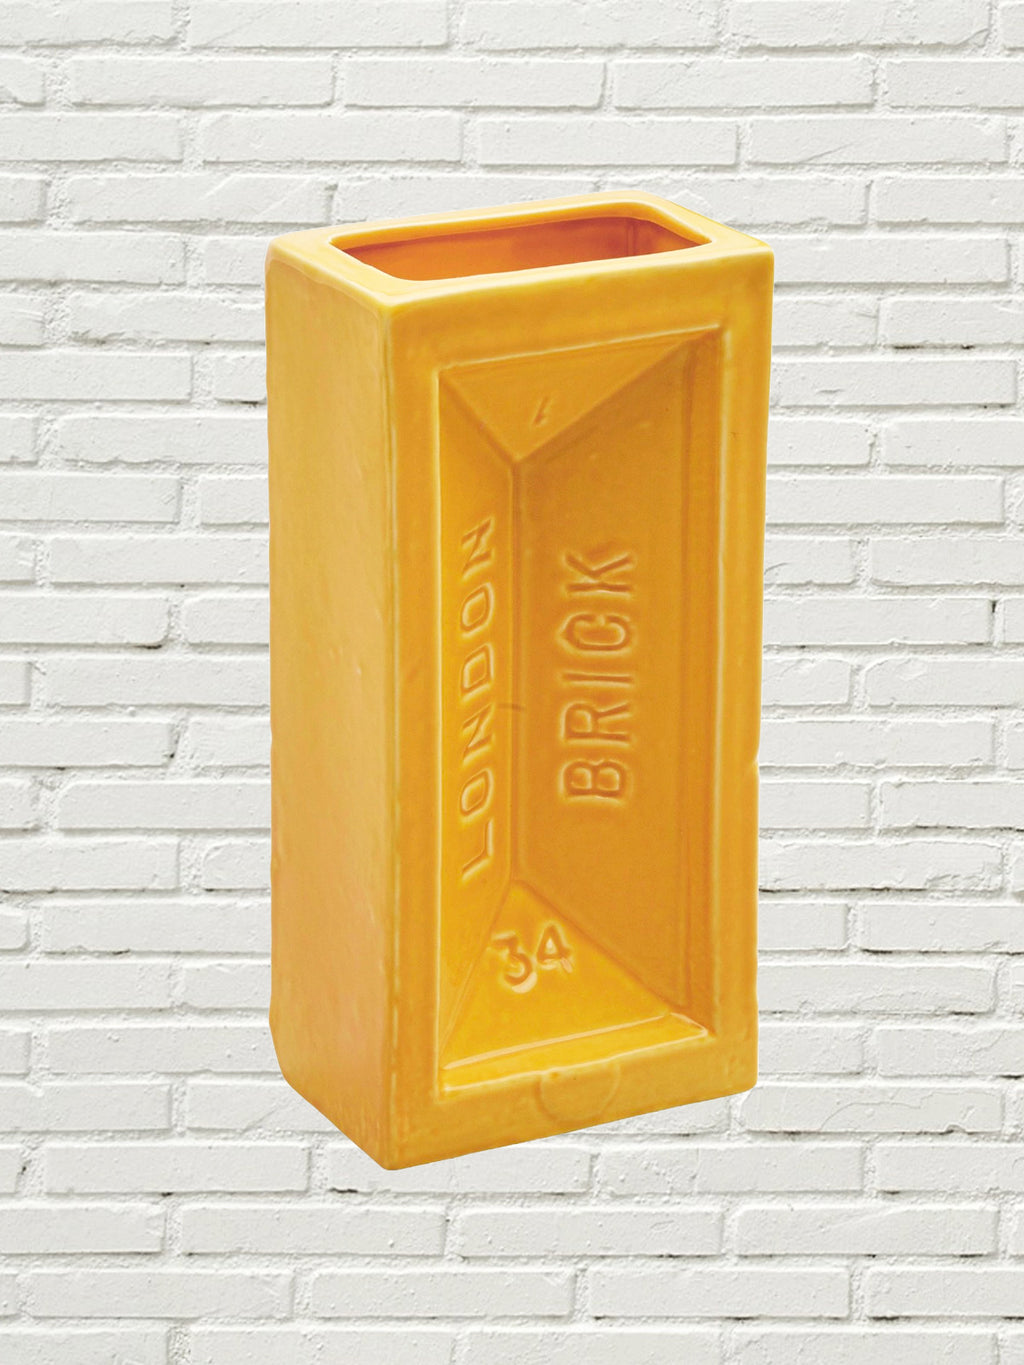 London Brick Vase - Yellow